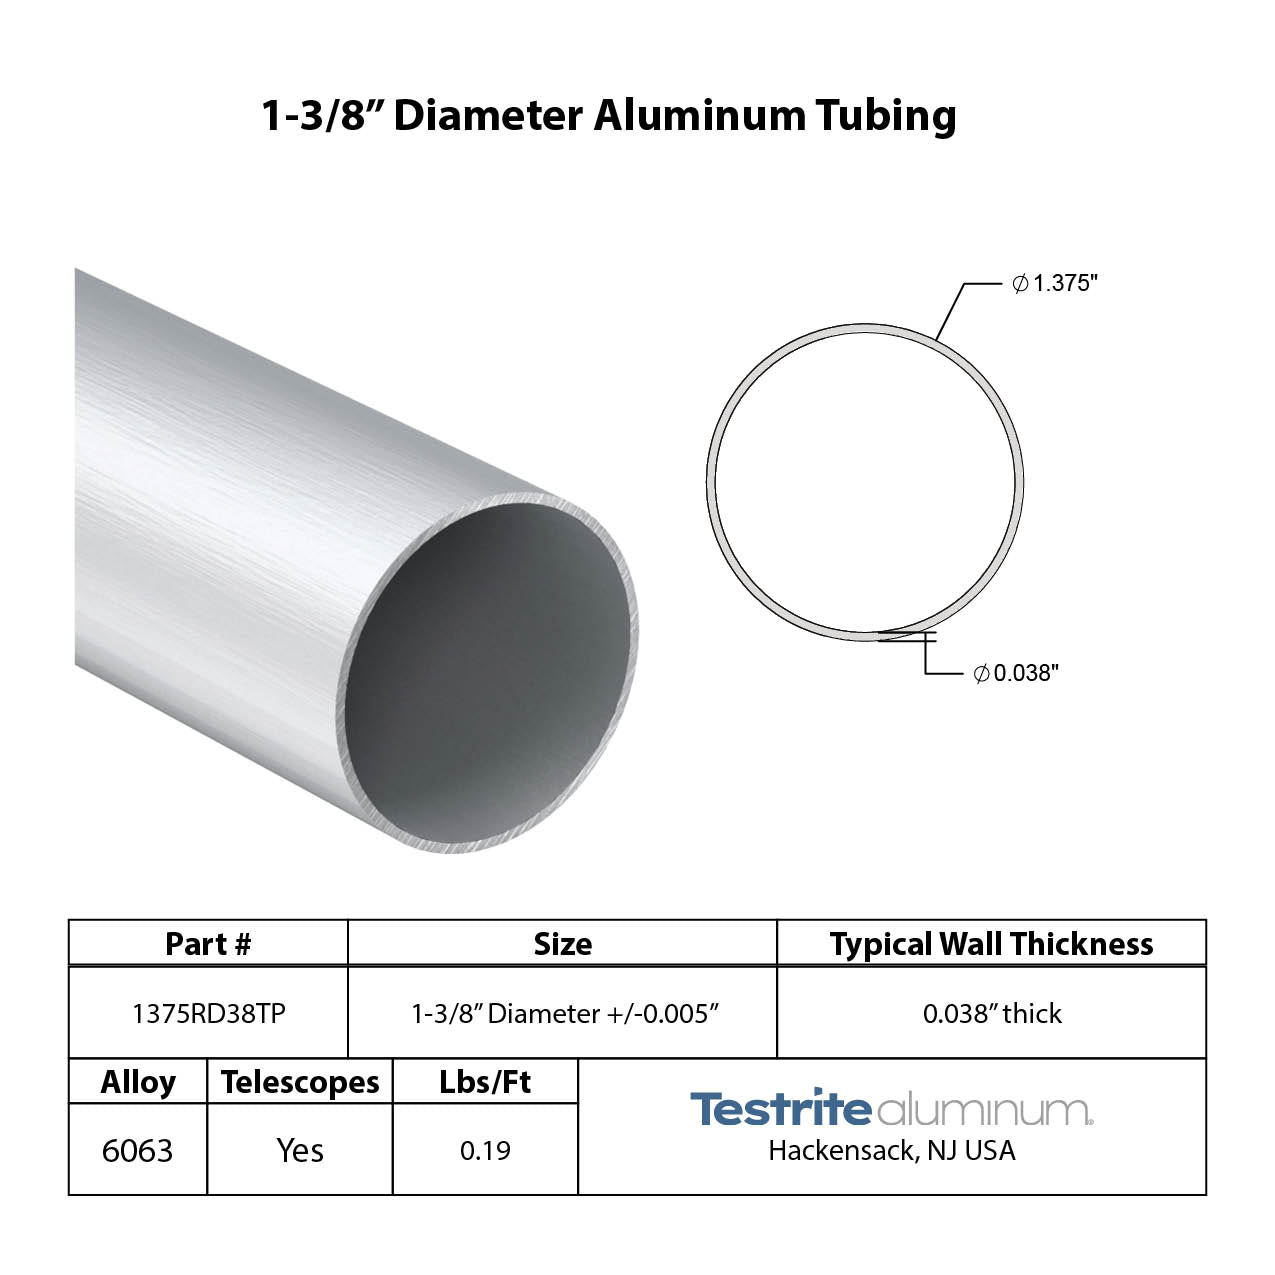 1-3/8" Diameter drawn aluminum tubing print .038" wall similar to .035" wall